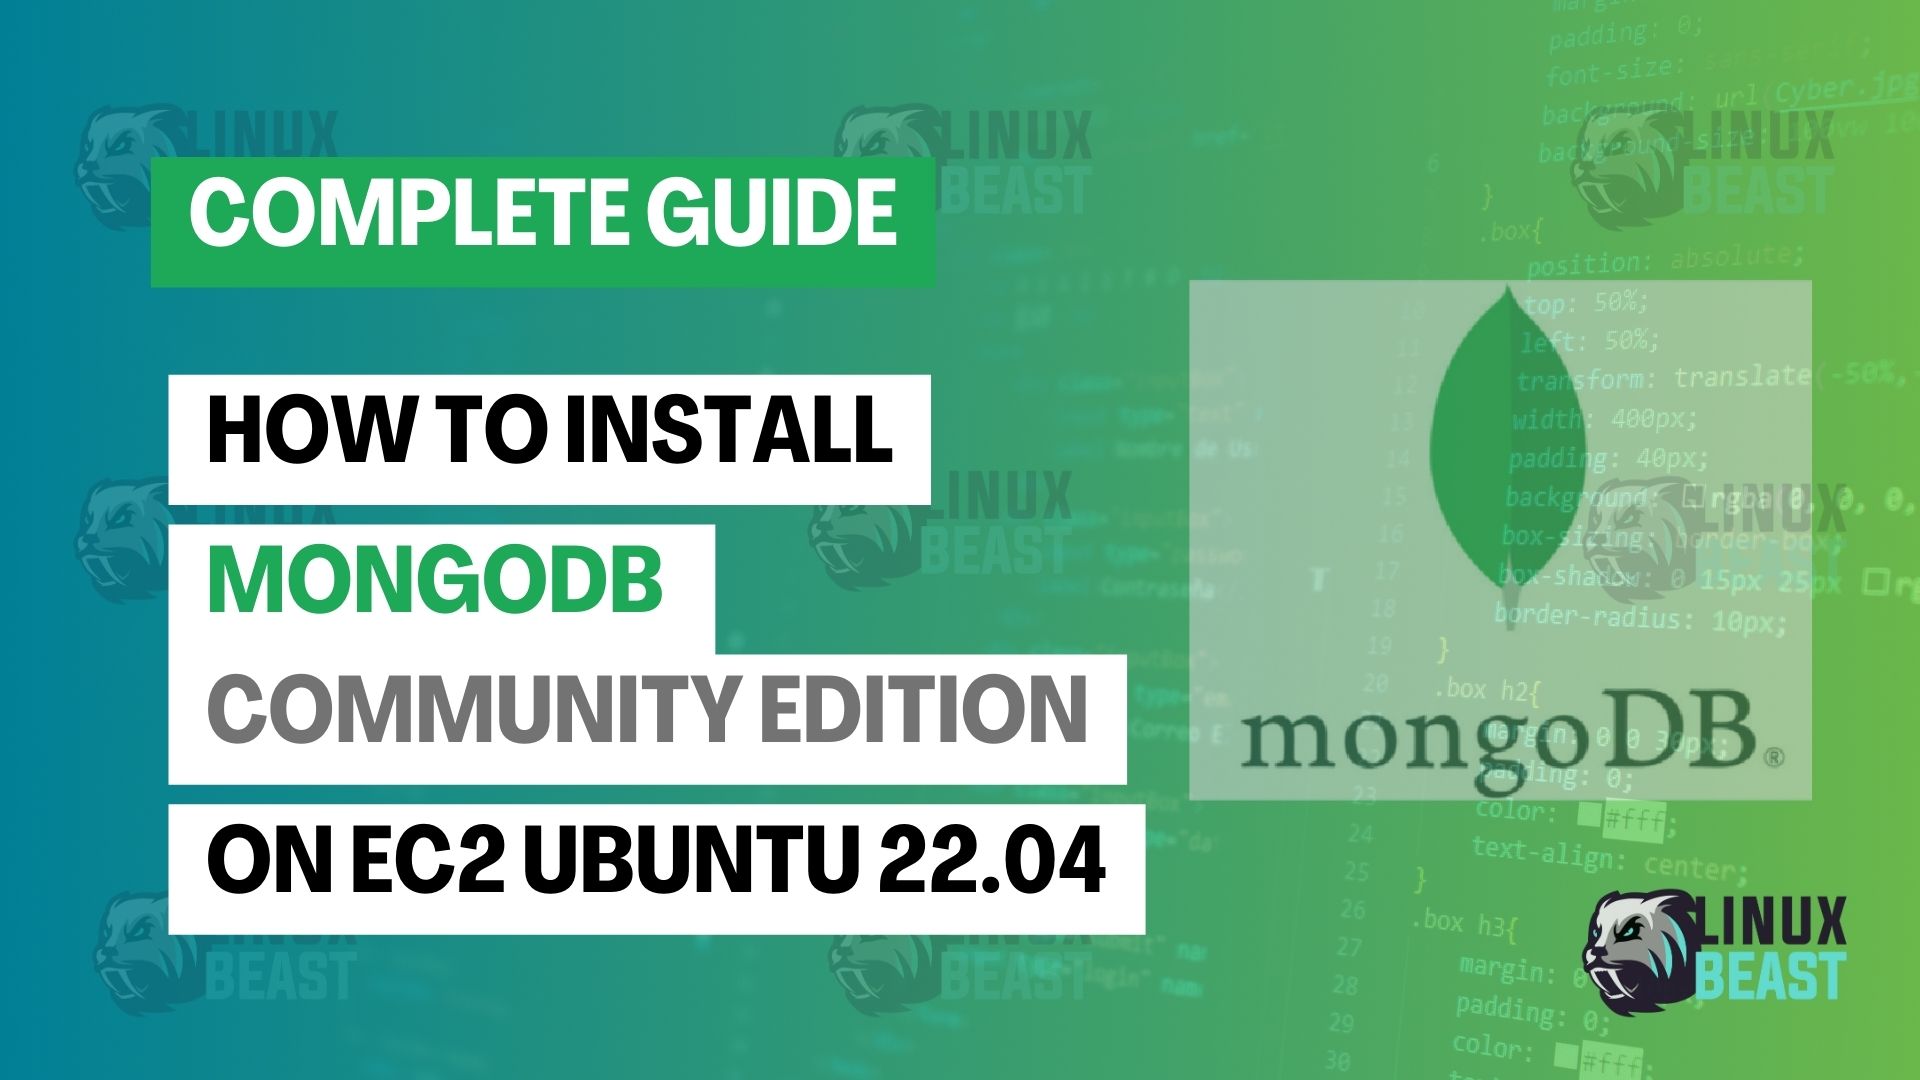 How to Install MongoDB Community Edition on an EC2 Ubuntu 22.04